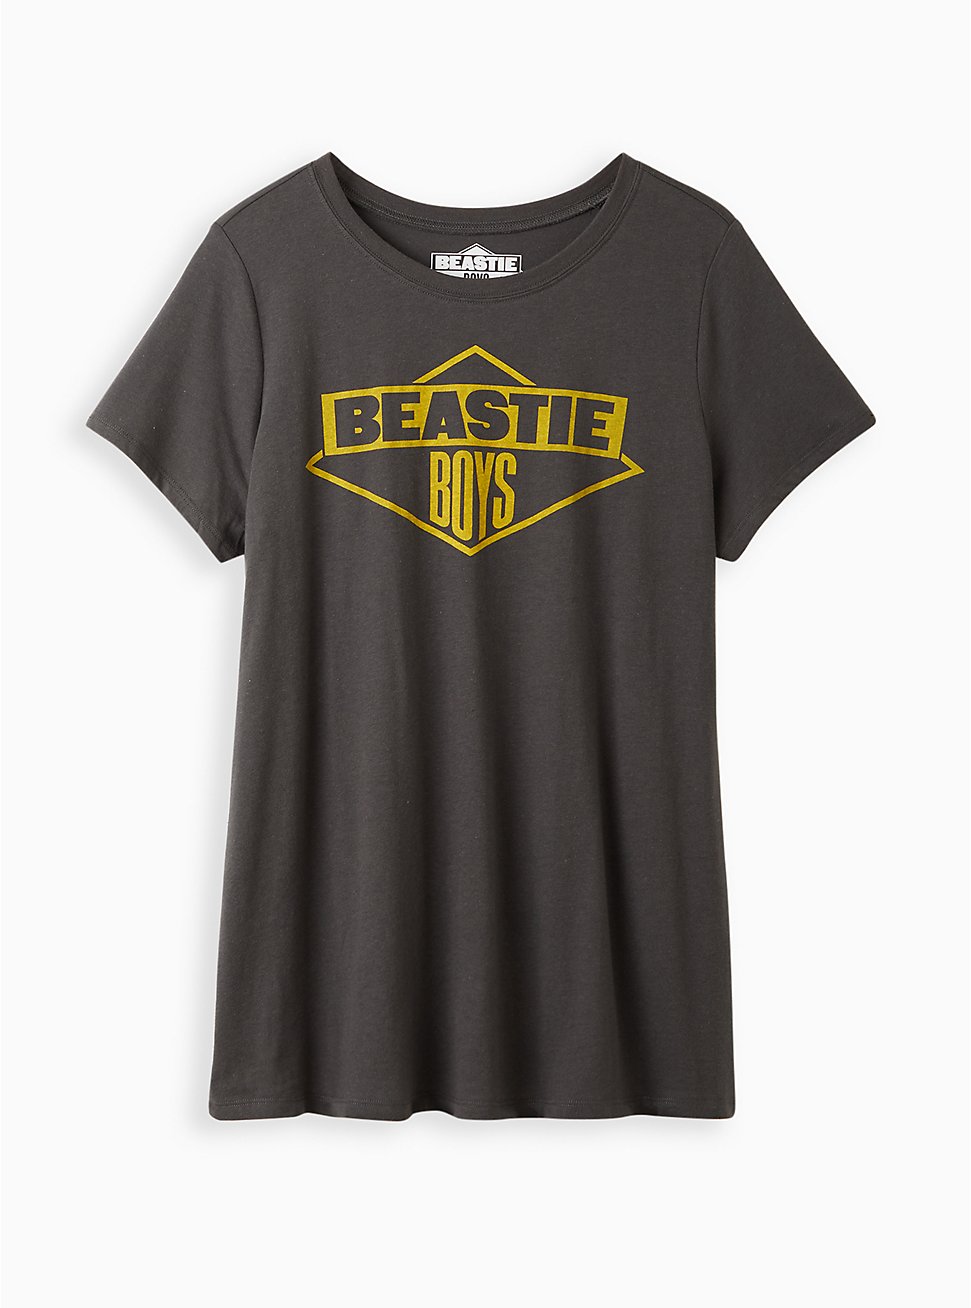 Plus Size Classic Fit Crew Tee - Vintage Beastie Boys Black, DEEP BLACK, hi-res